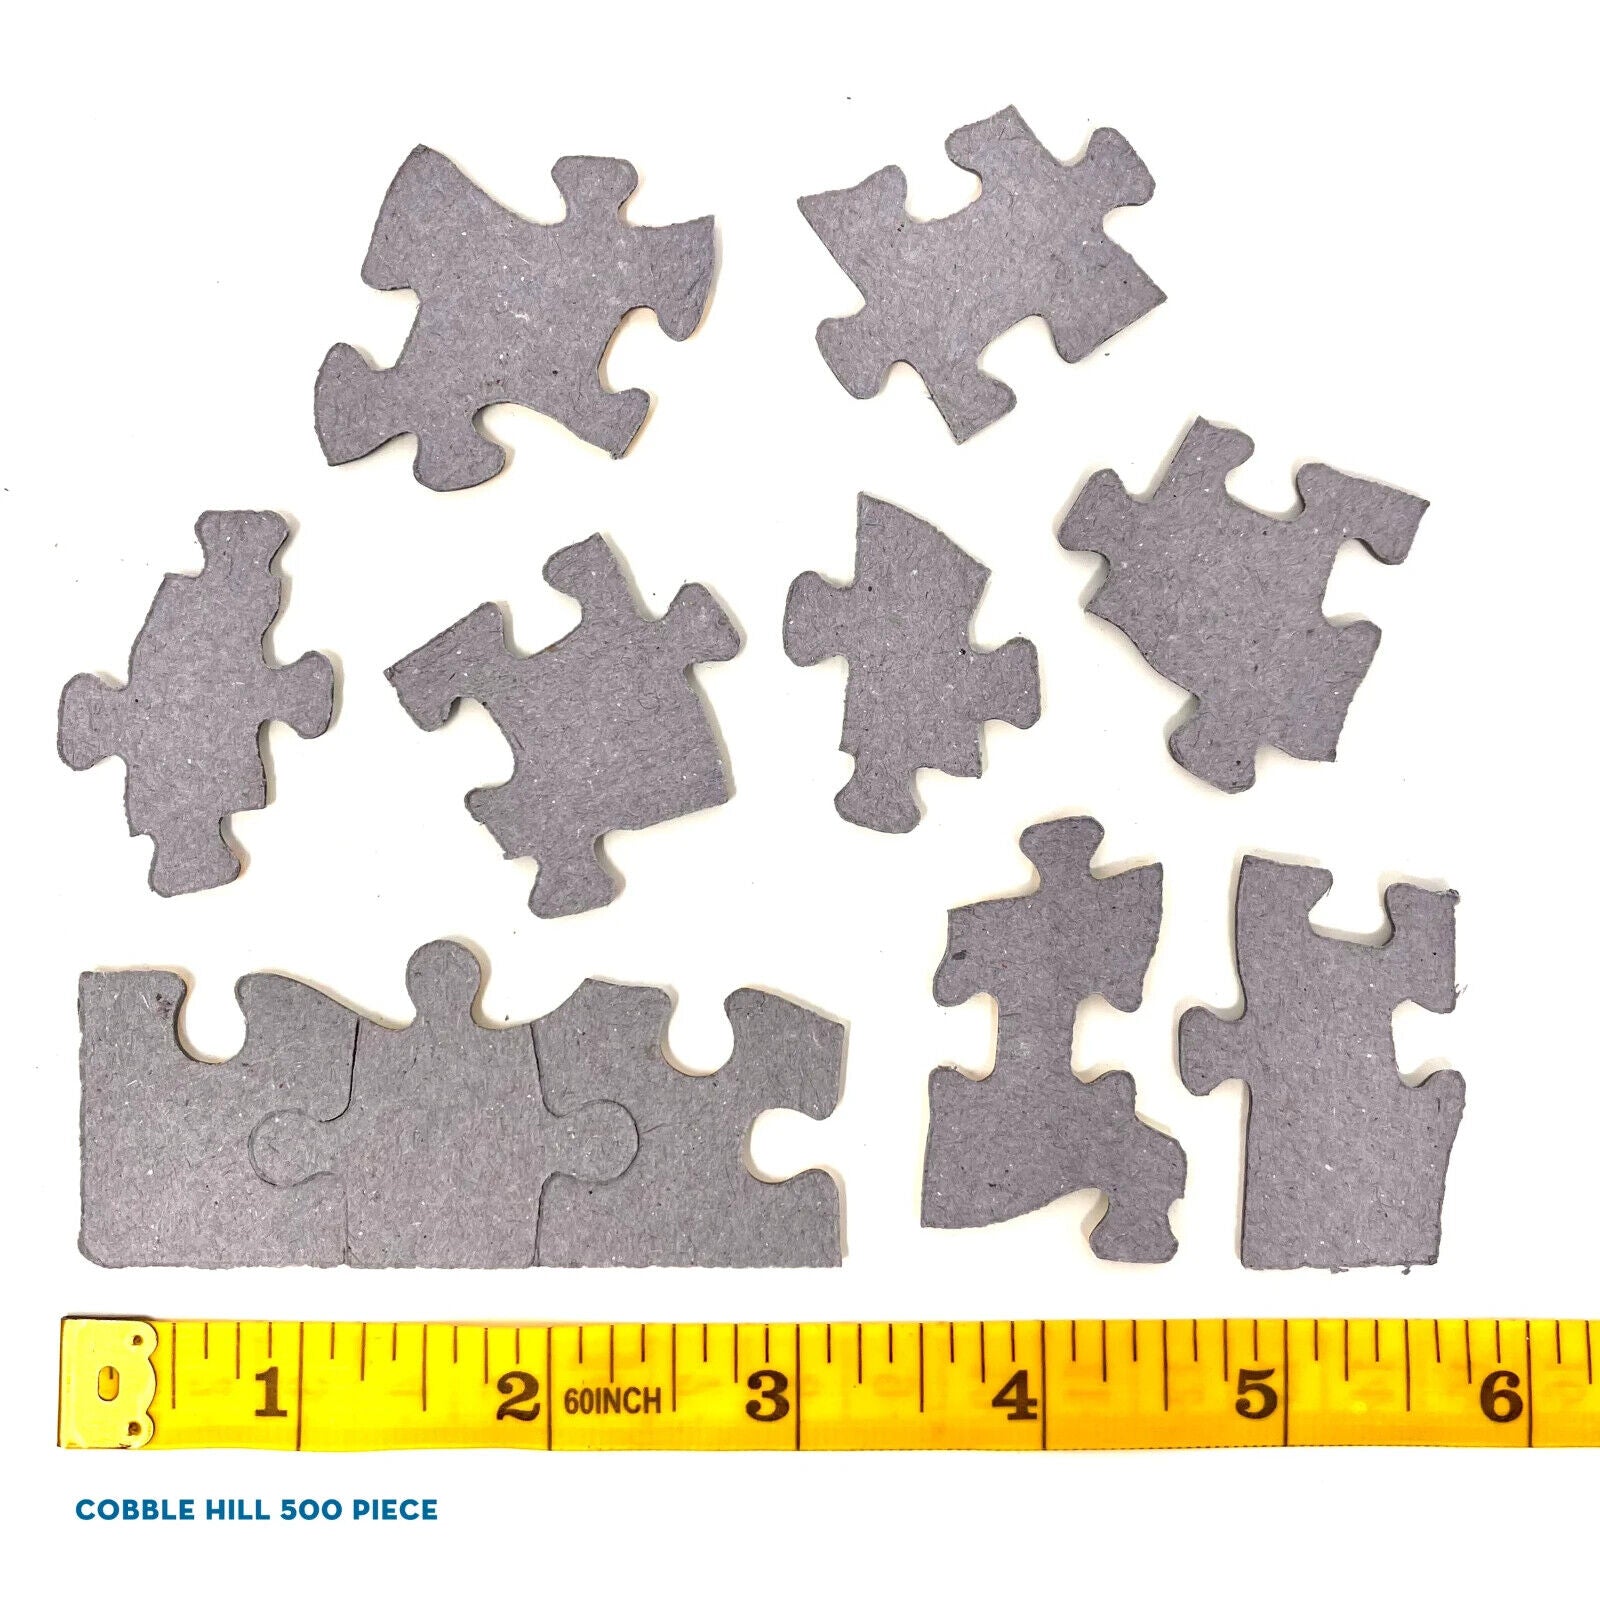 Spring Birdhouse 500 Piece Jigsaw Puzzle Cobble Hill